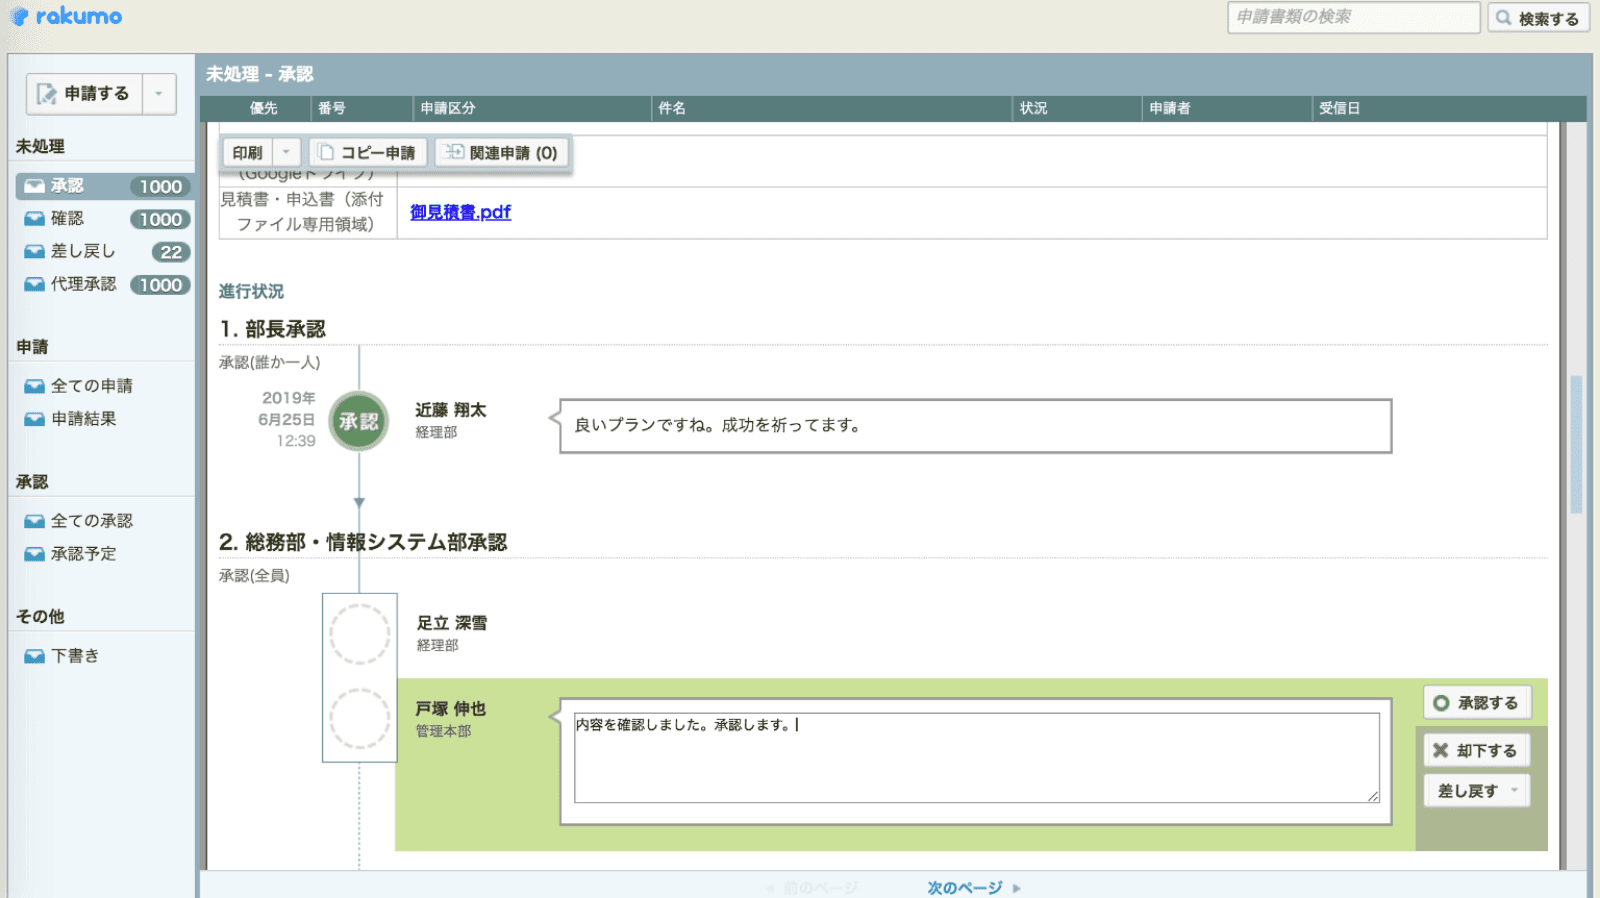 rakumo ワークフロー 承認・確認時のコメント入力画面